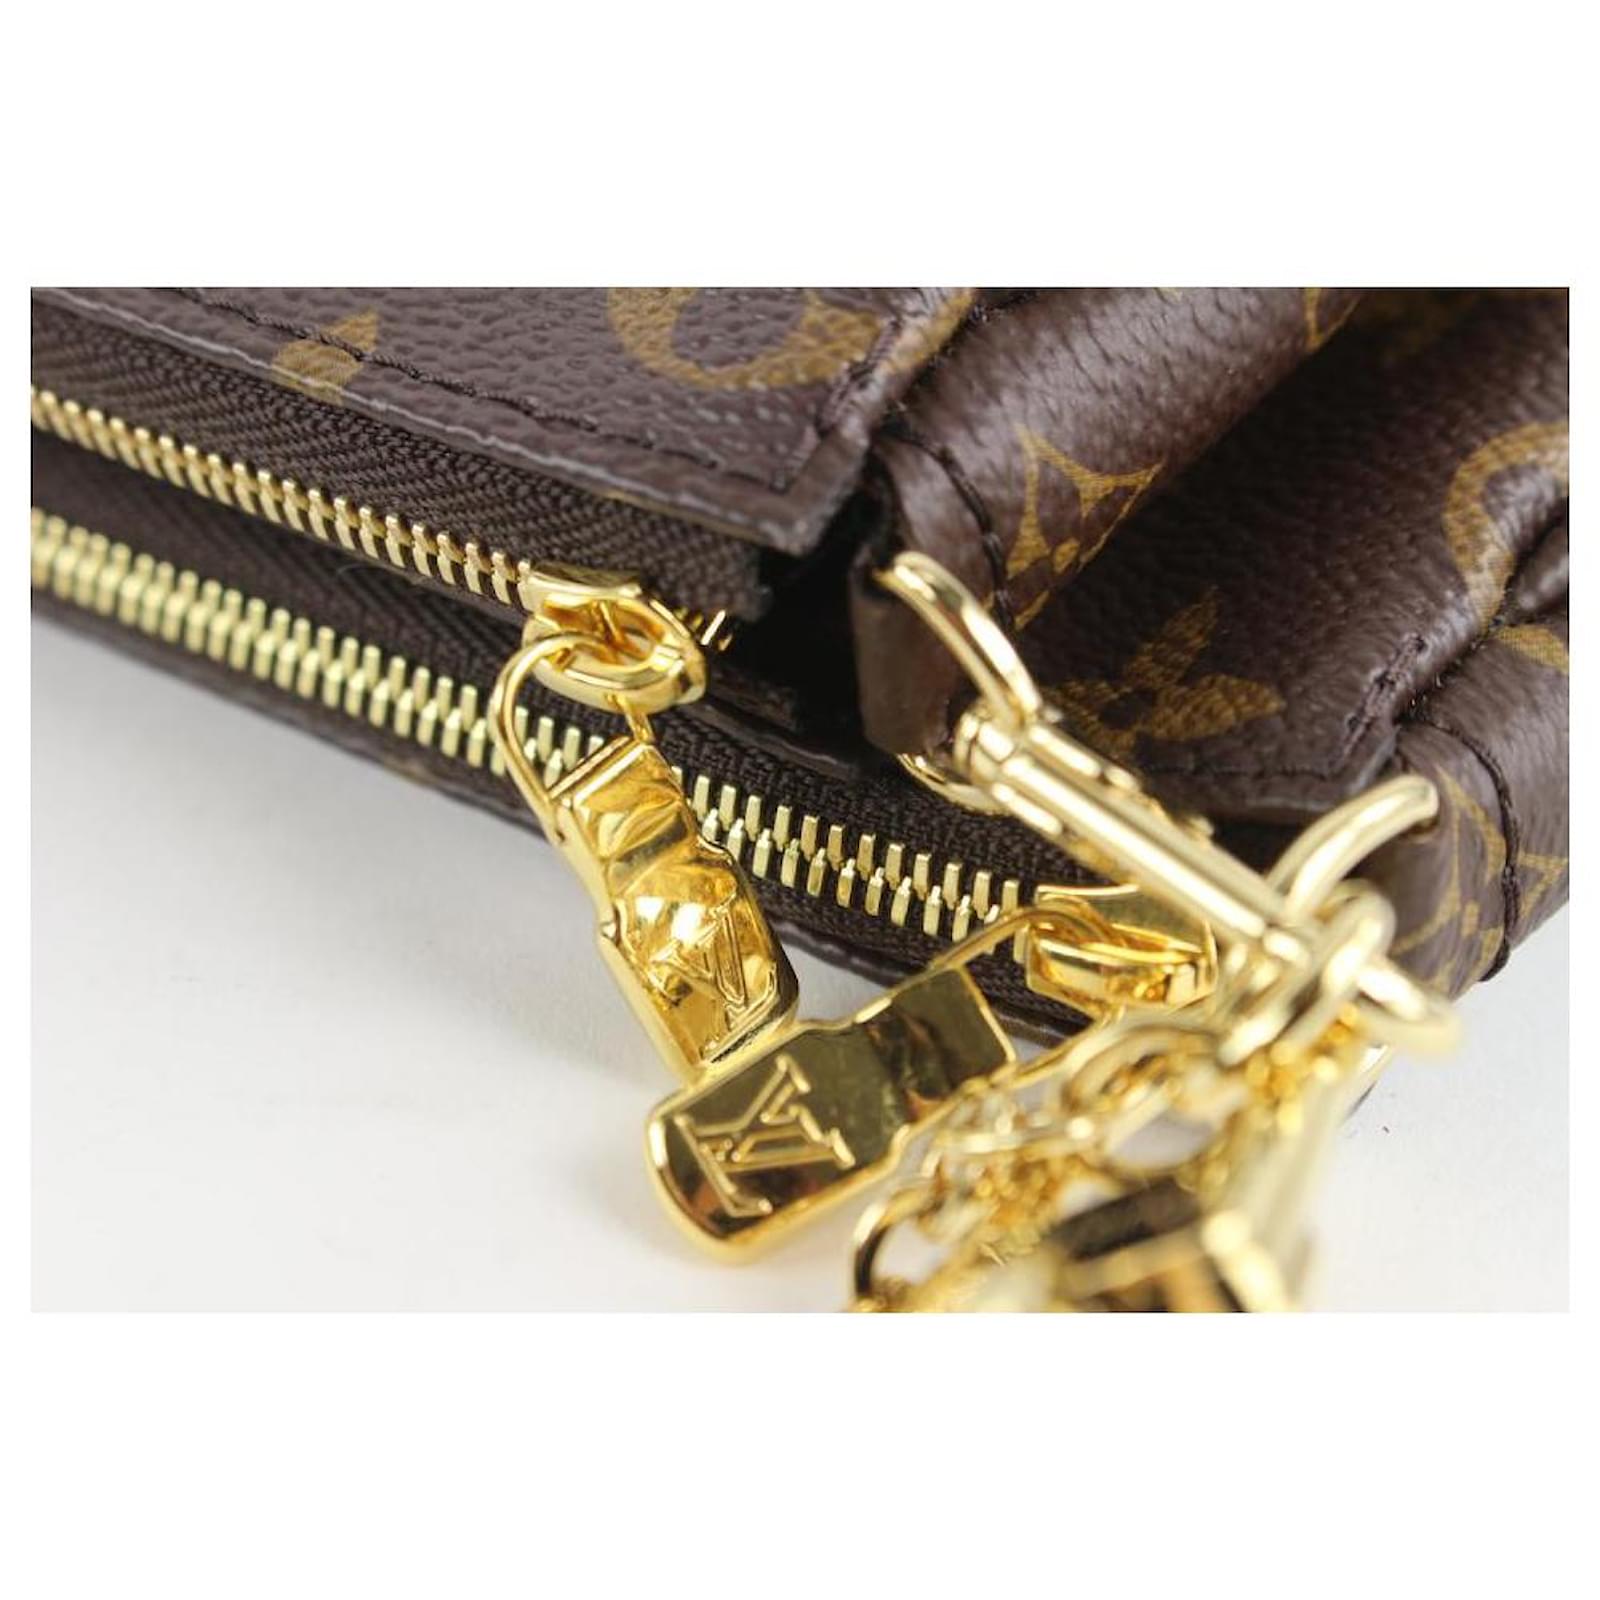 New in Box Louis Vuitton Limited Edition Pochette Trio Bag at